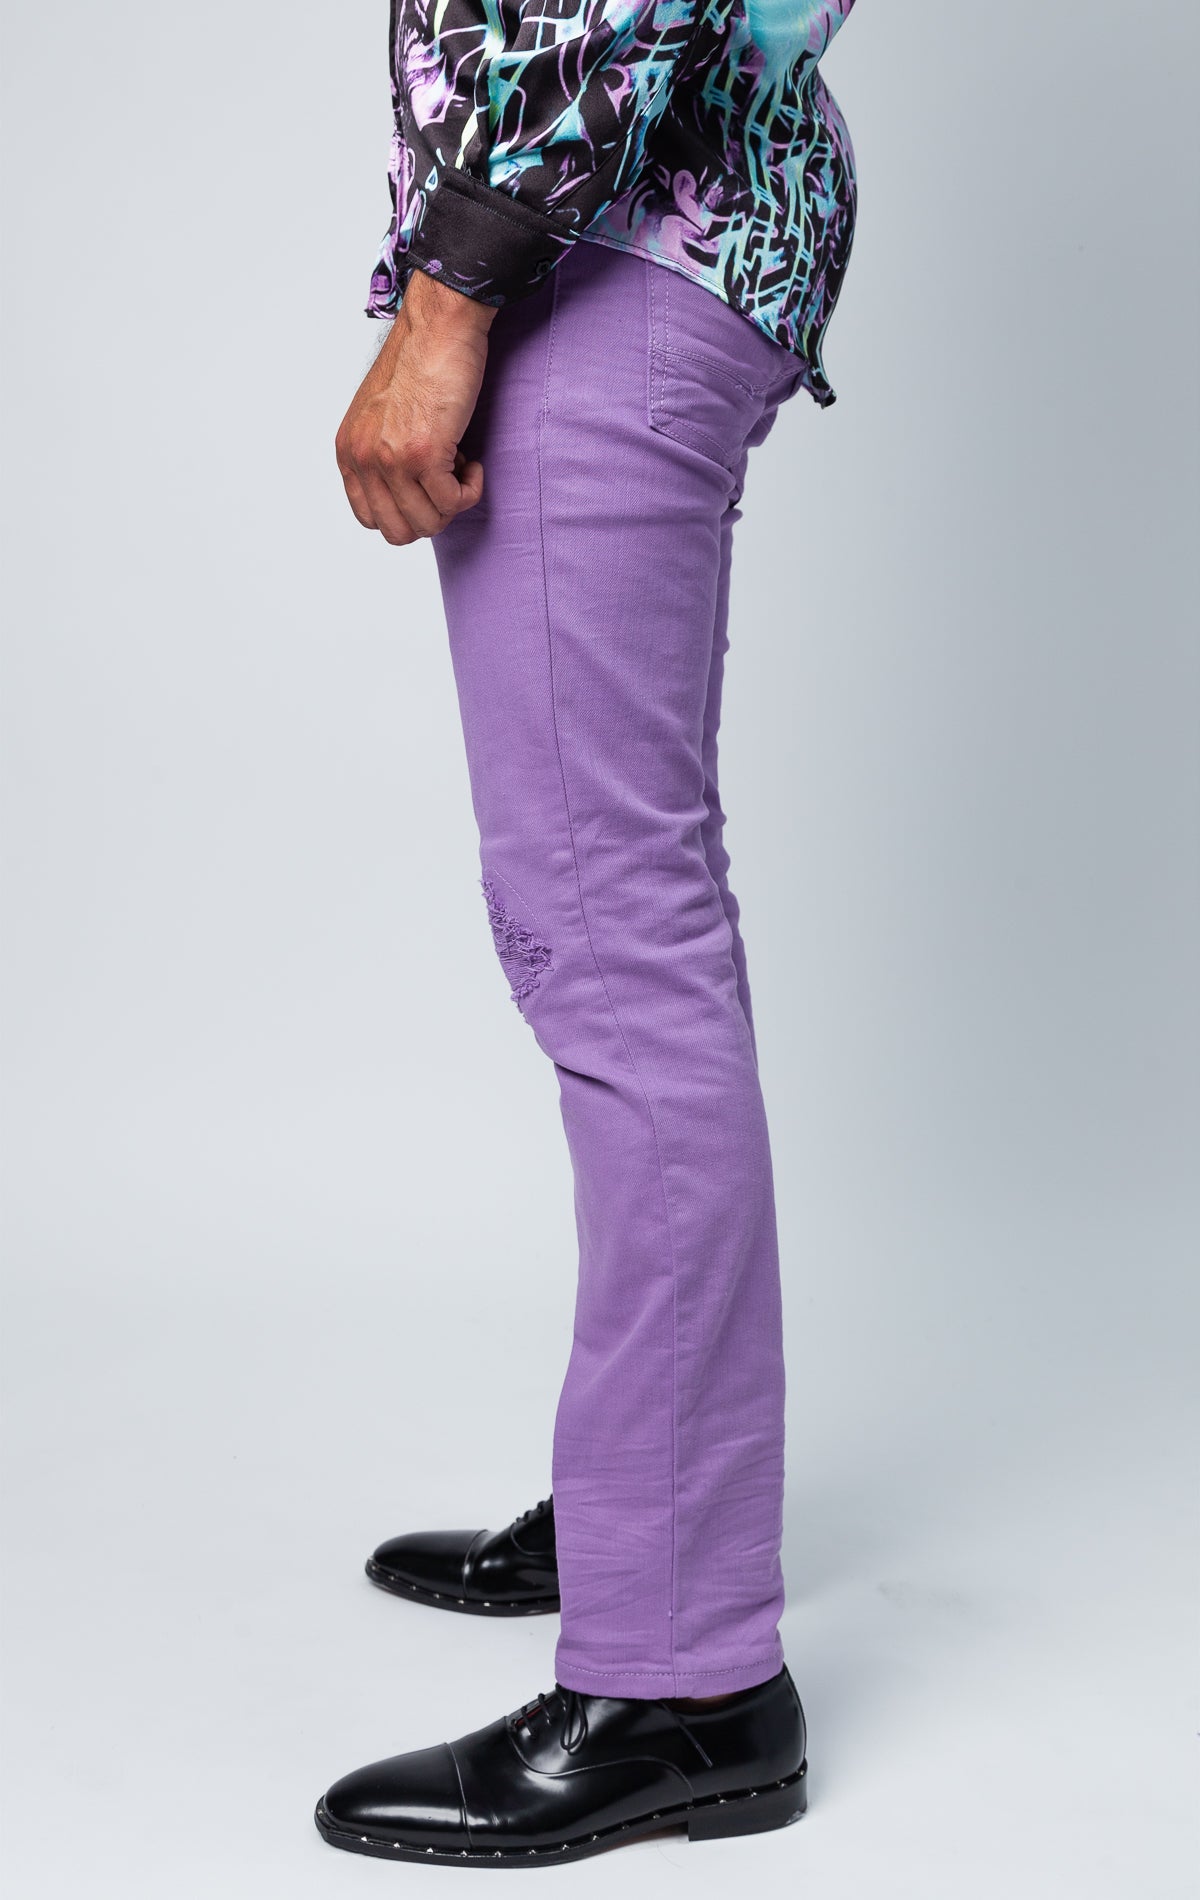 Purple denim pants